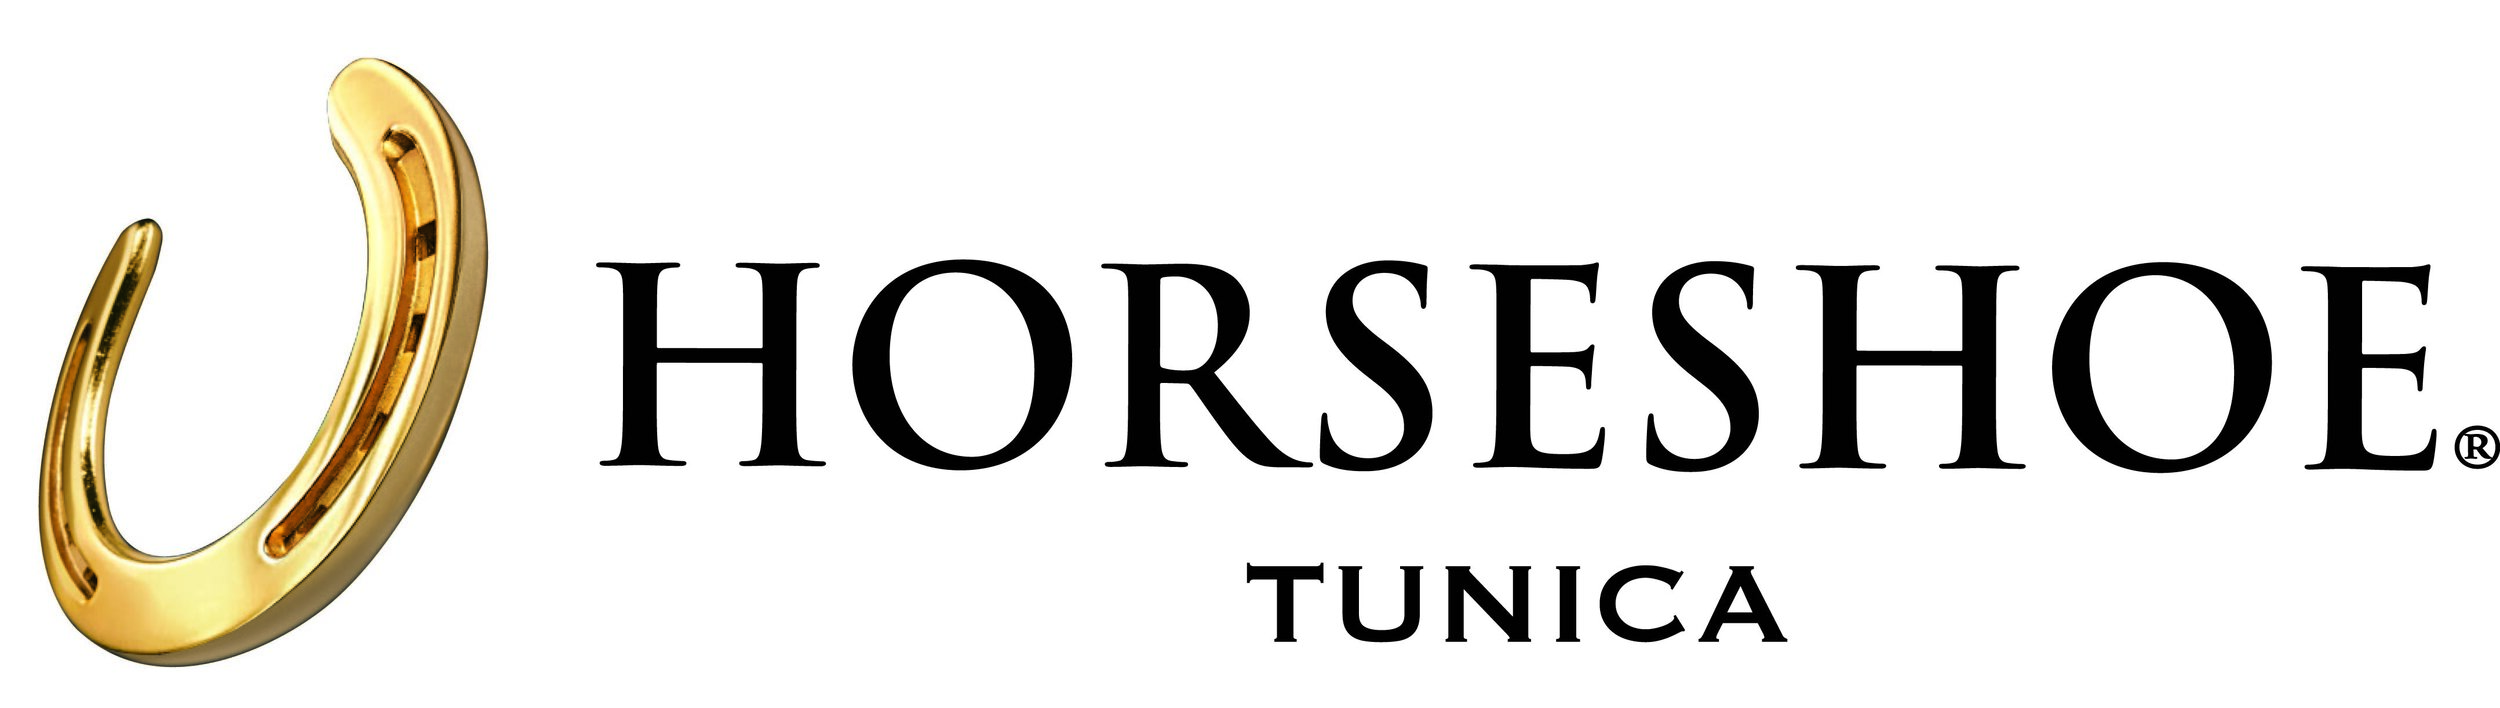 Horseshoe Tunica.jpg